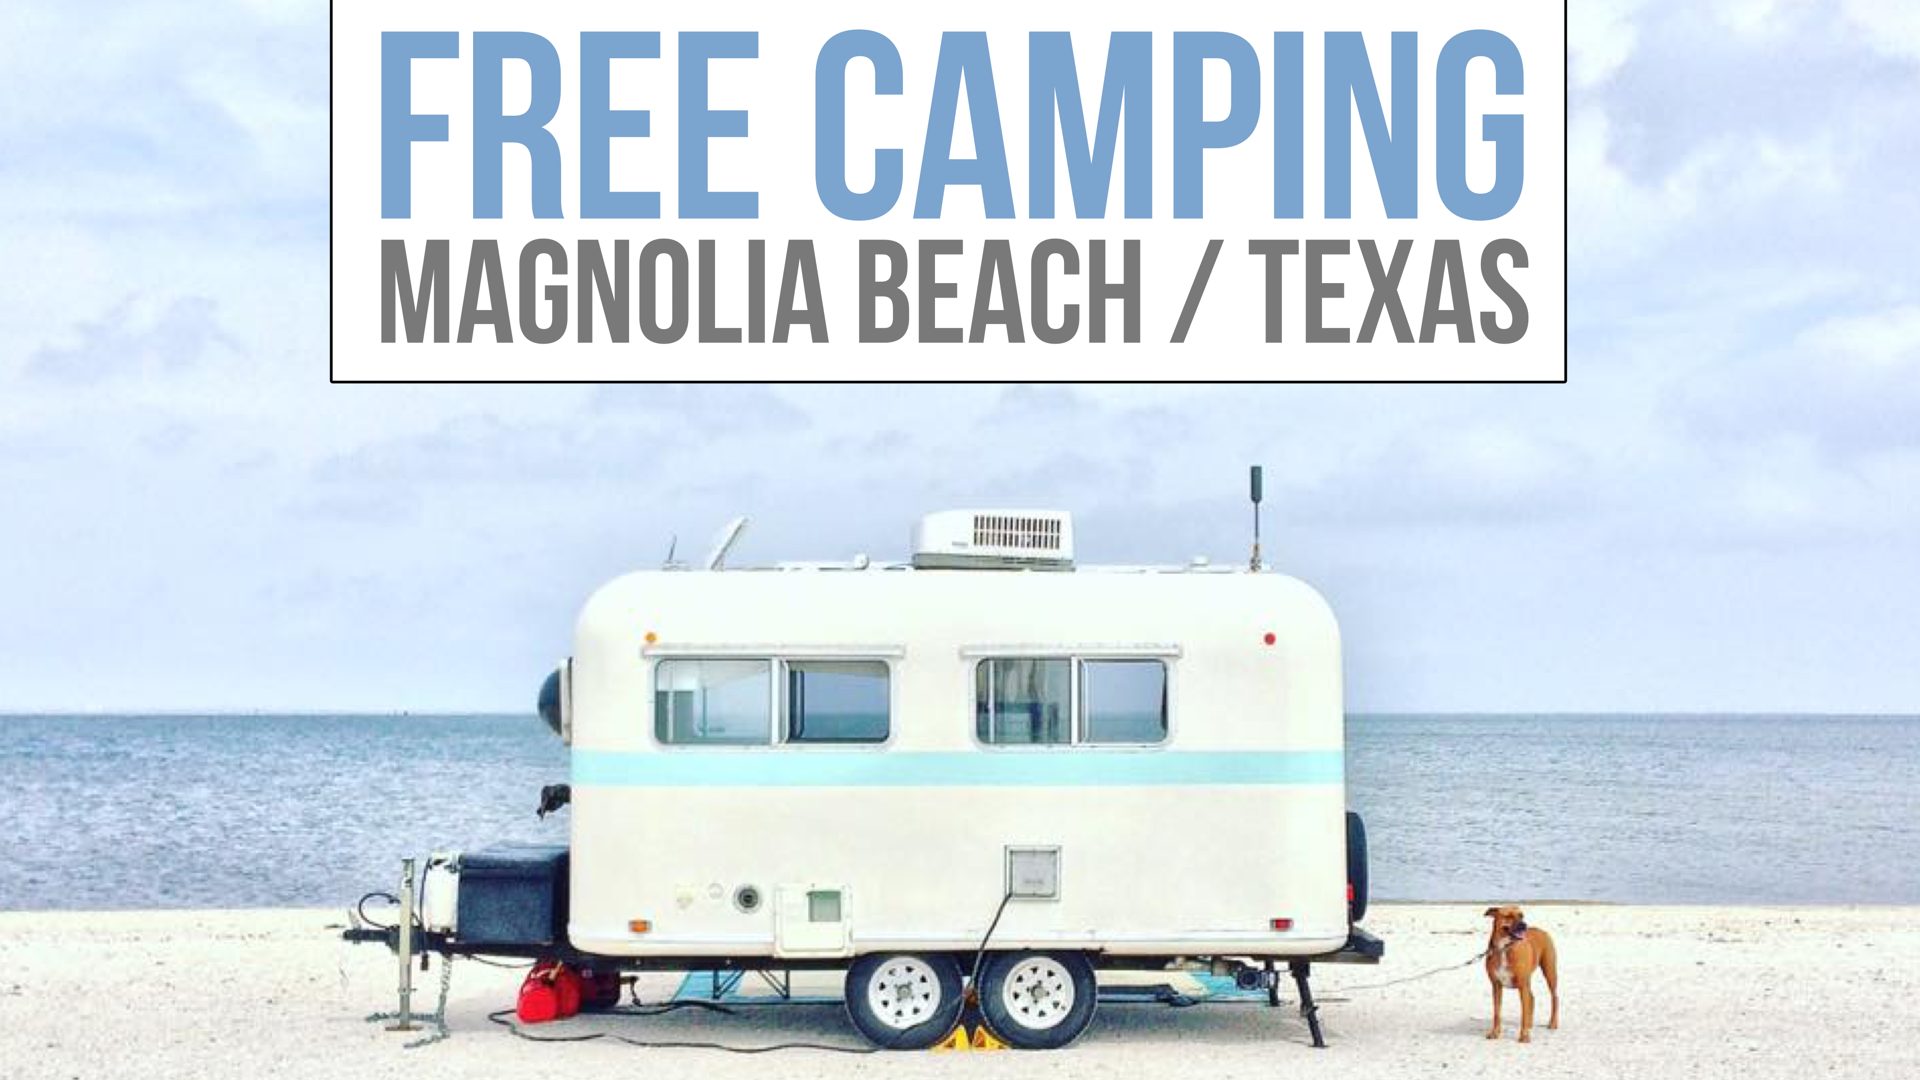 Free Camping on Magnolia Beach, Texas